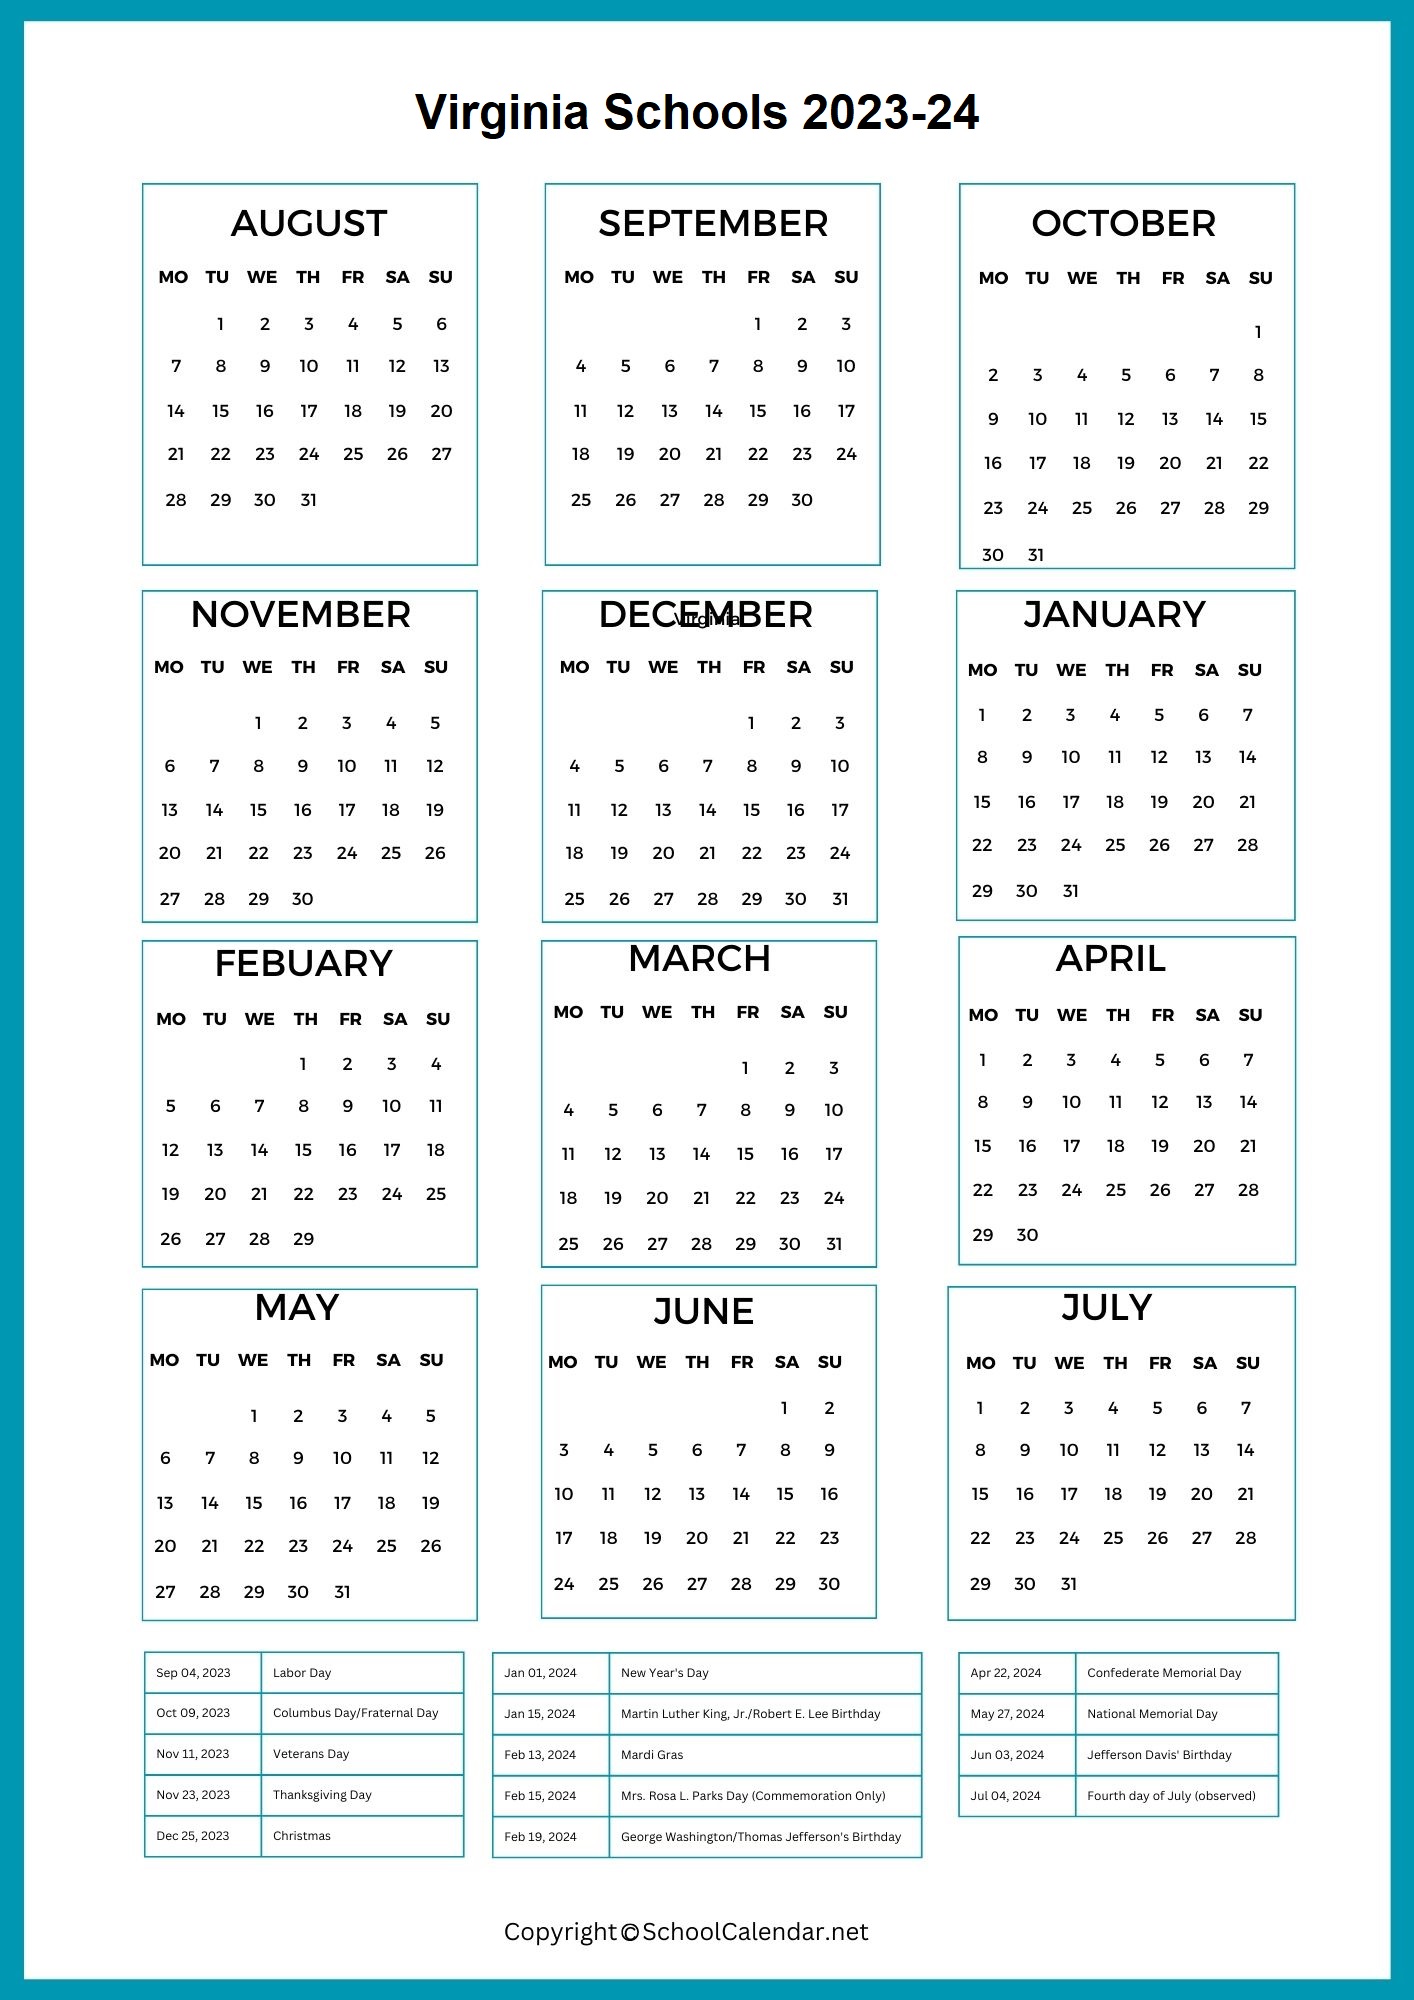 Virginia School Holiday Calendar 2023